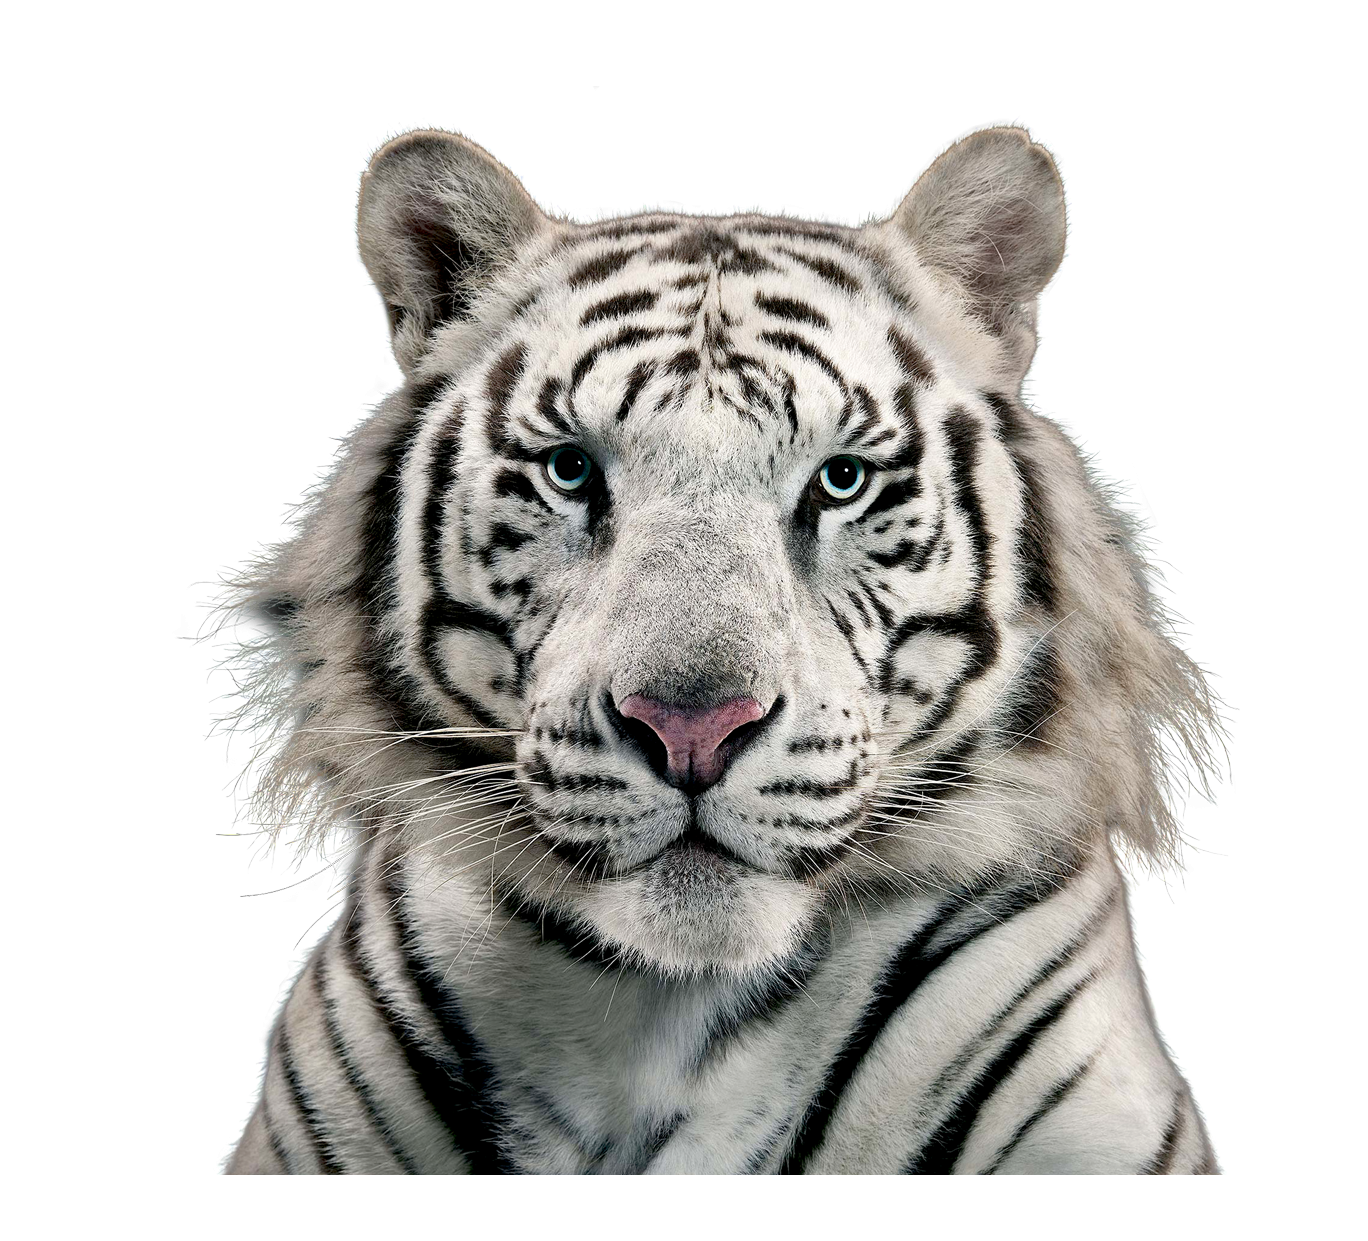 White Tiger Head PNG HQ Image Transparent